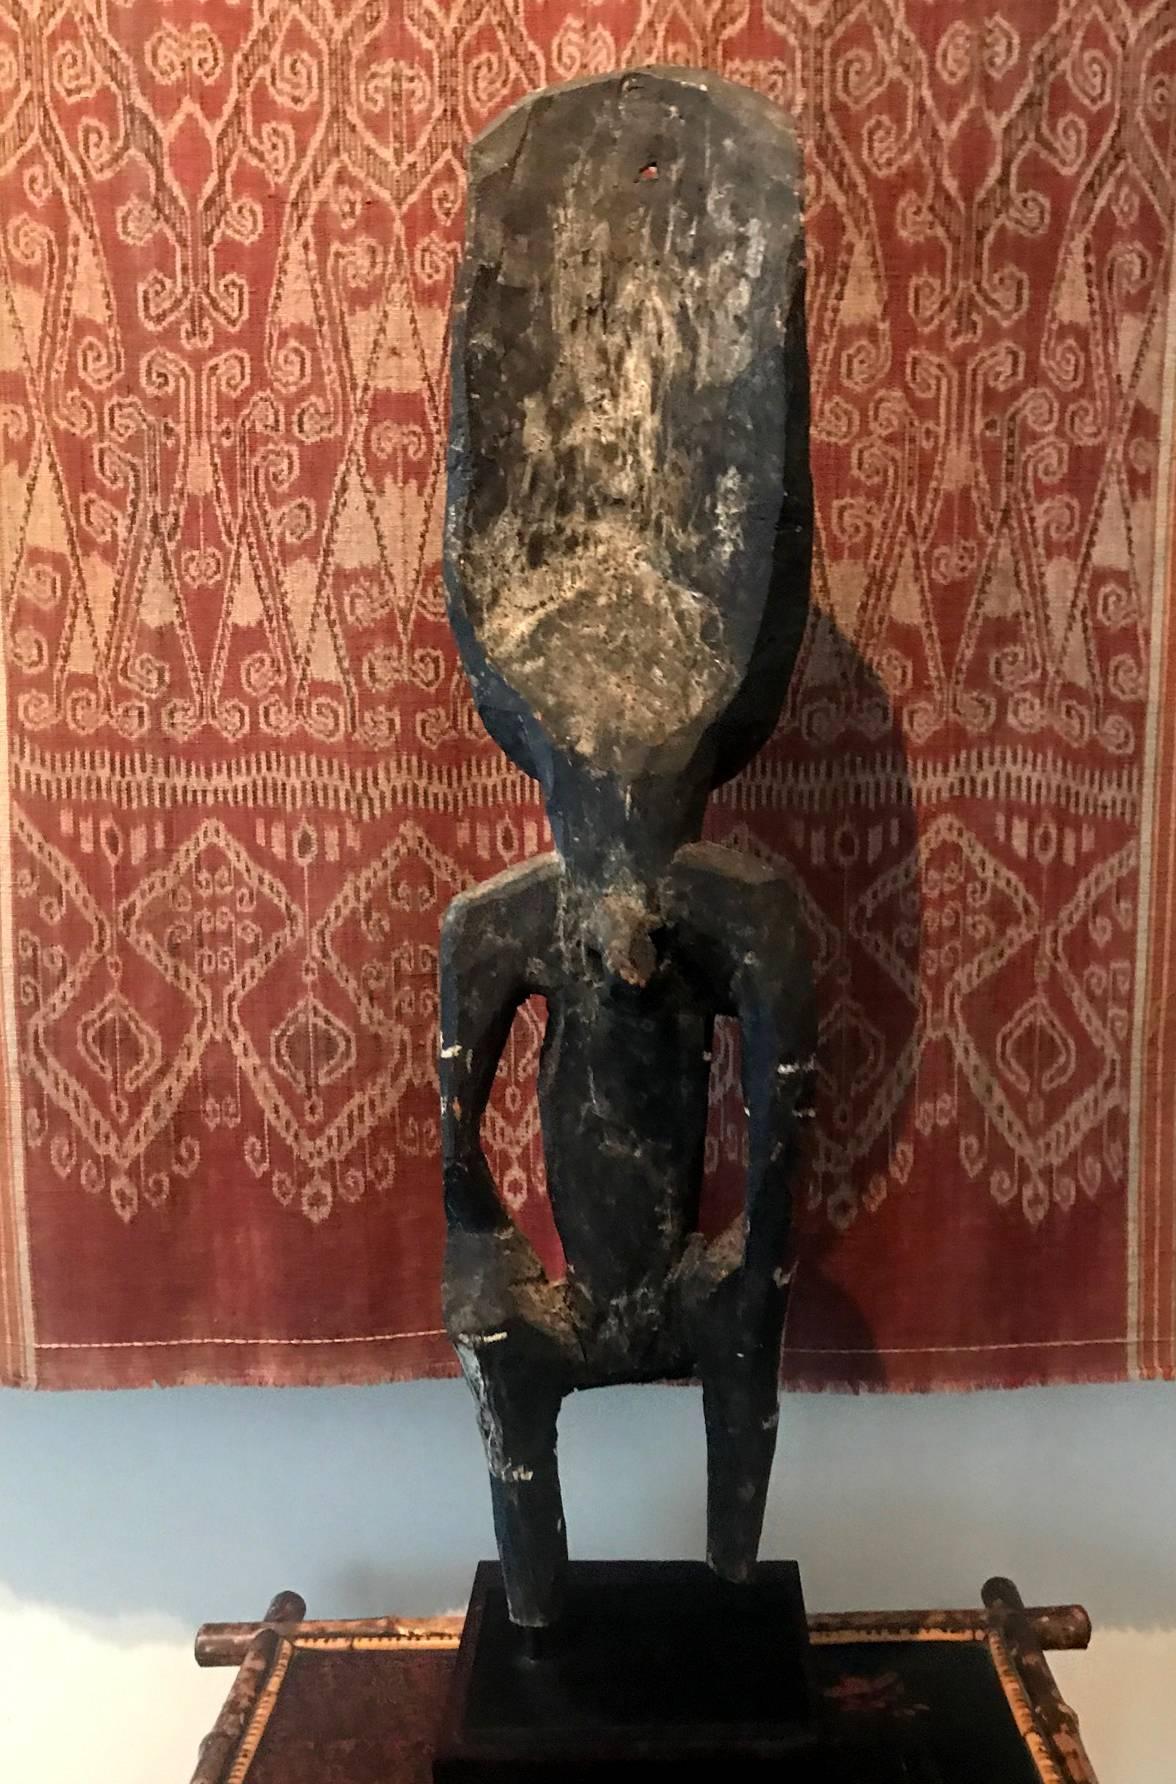 Wood Yam Ancestor Figure on Stand from Padua New Guinea